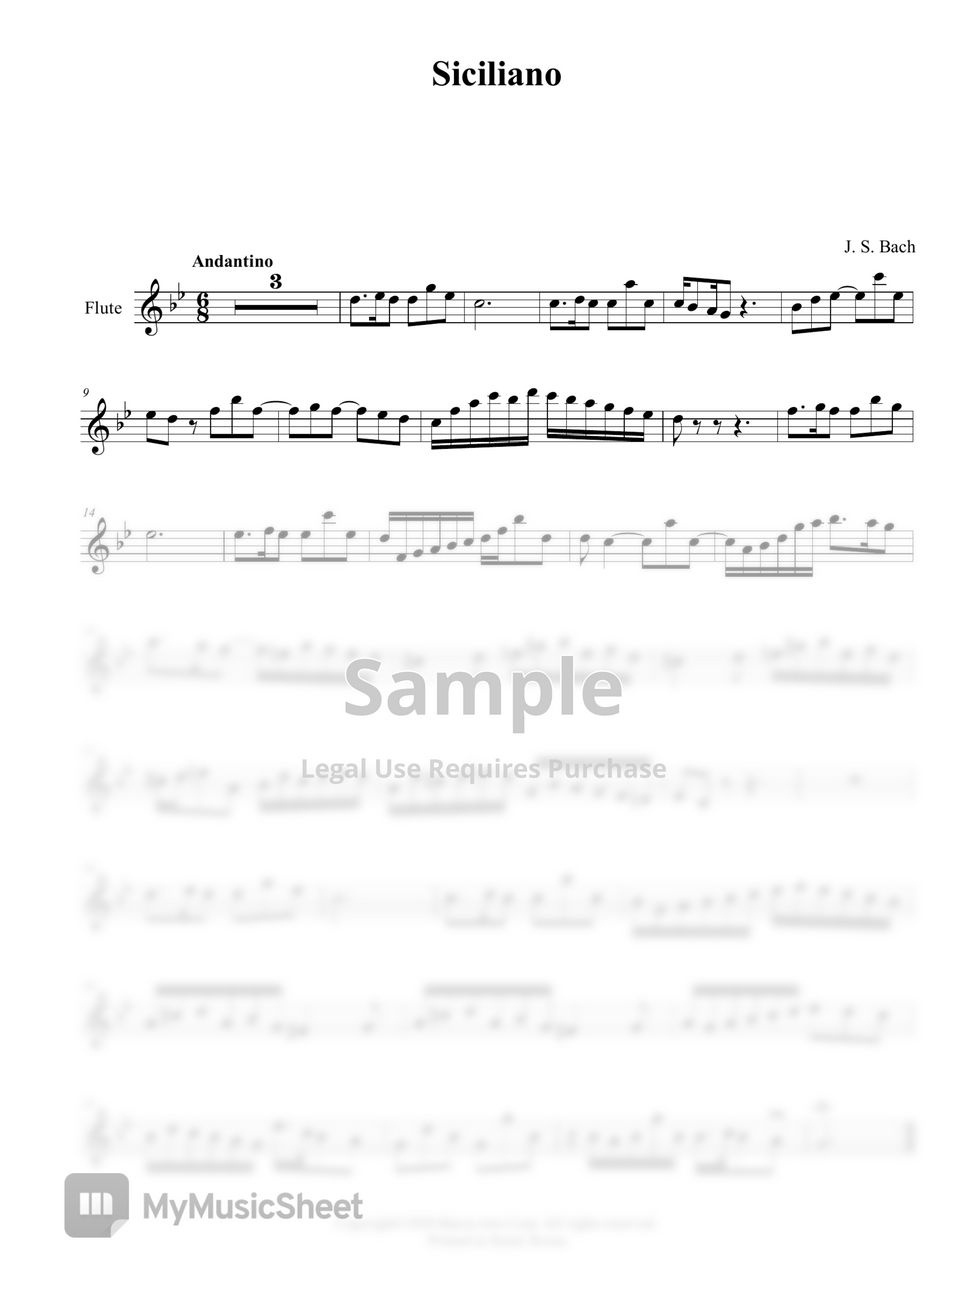 J.S.Bach바흐 - Siciliano시칠리아노 (Flute악보 반주악보, 플룻) by 연효정